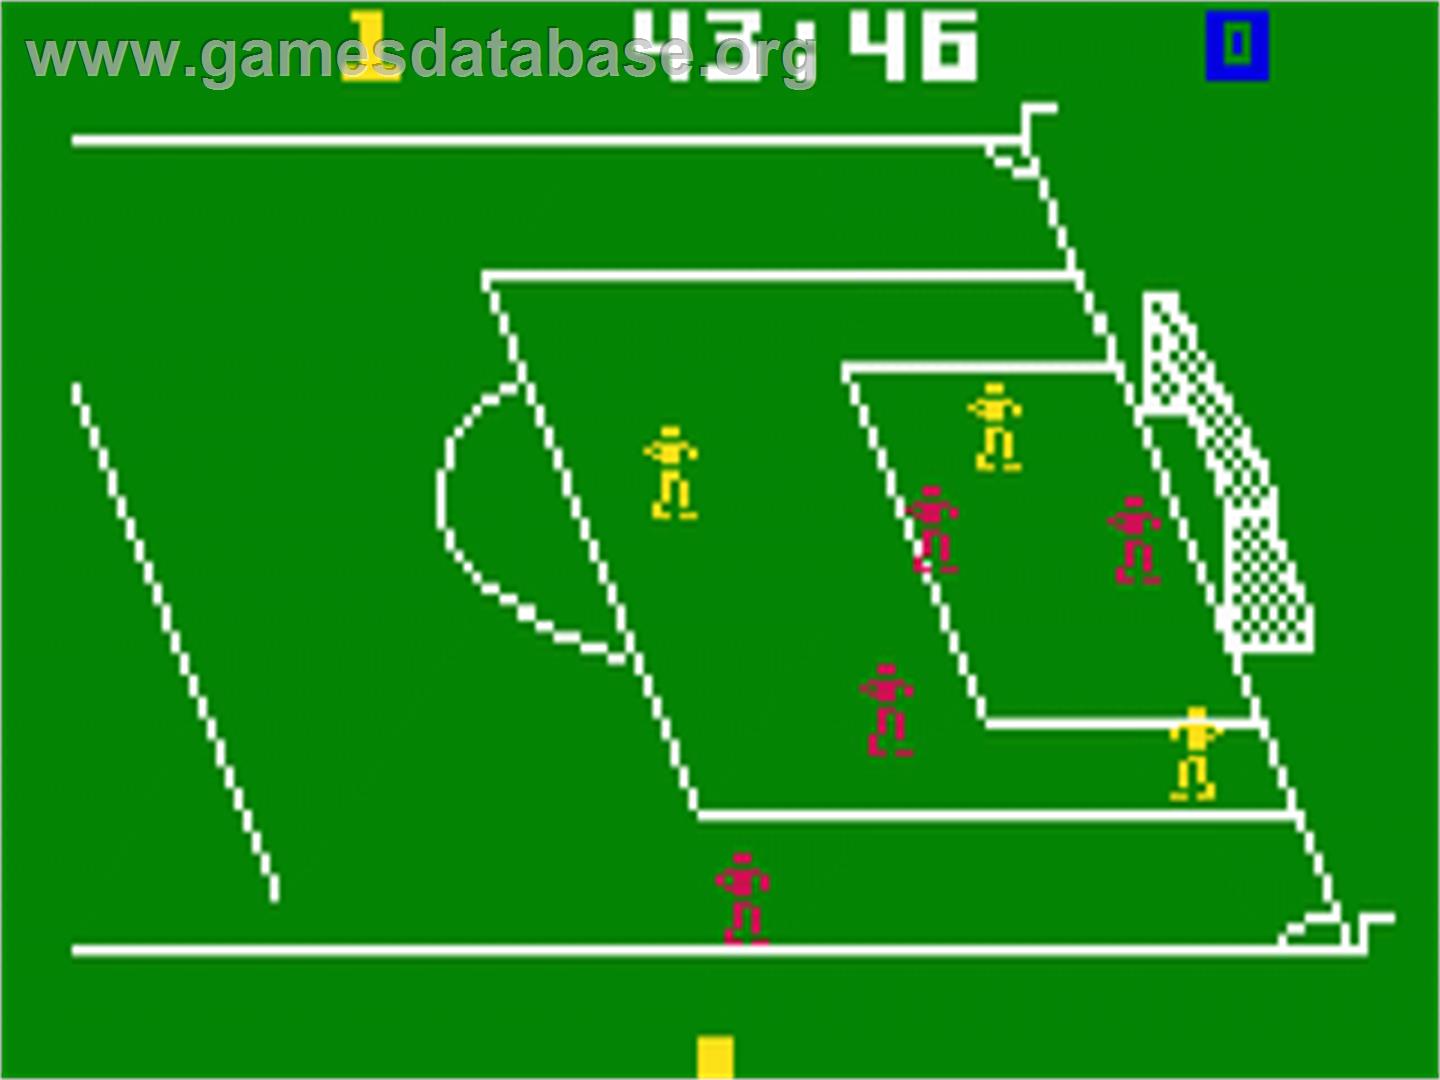 NASL Soccer - Mattel Intellivision - Artwork - In Game